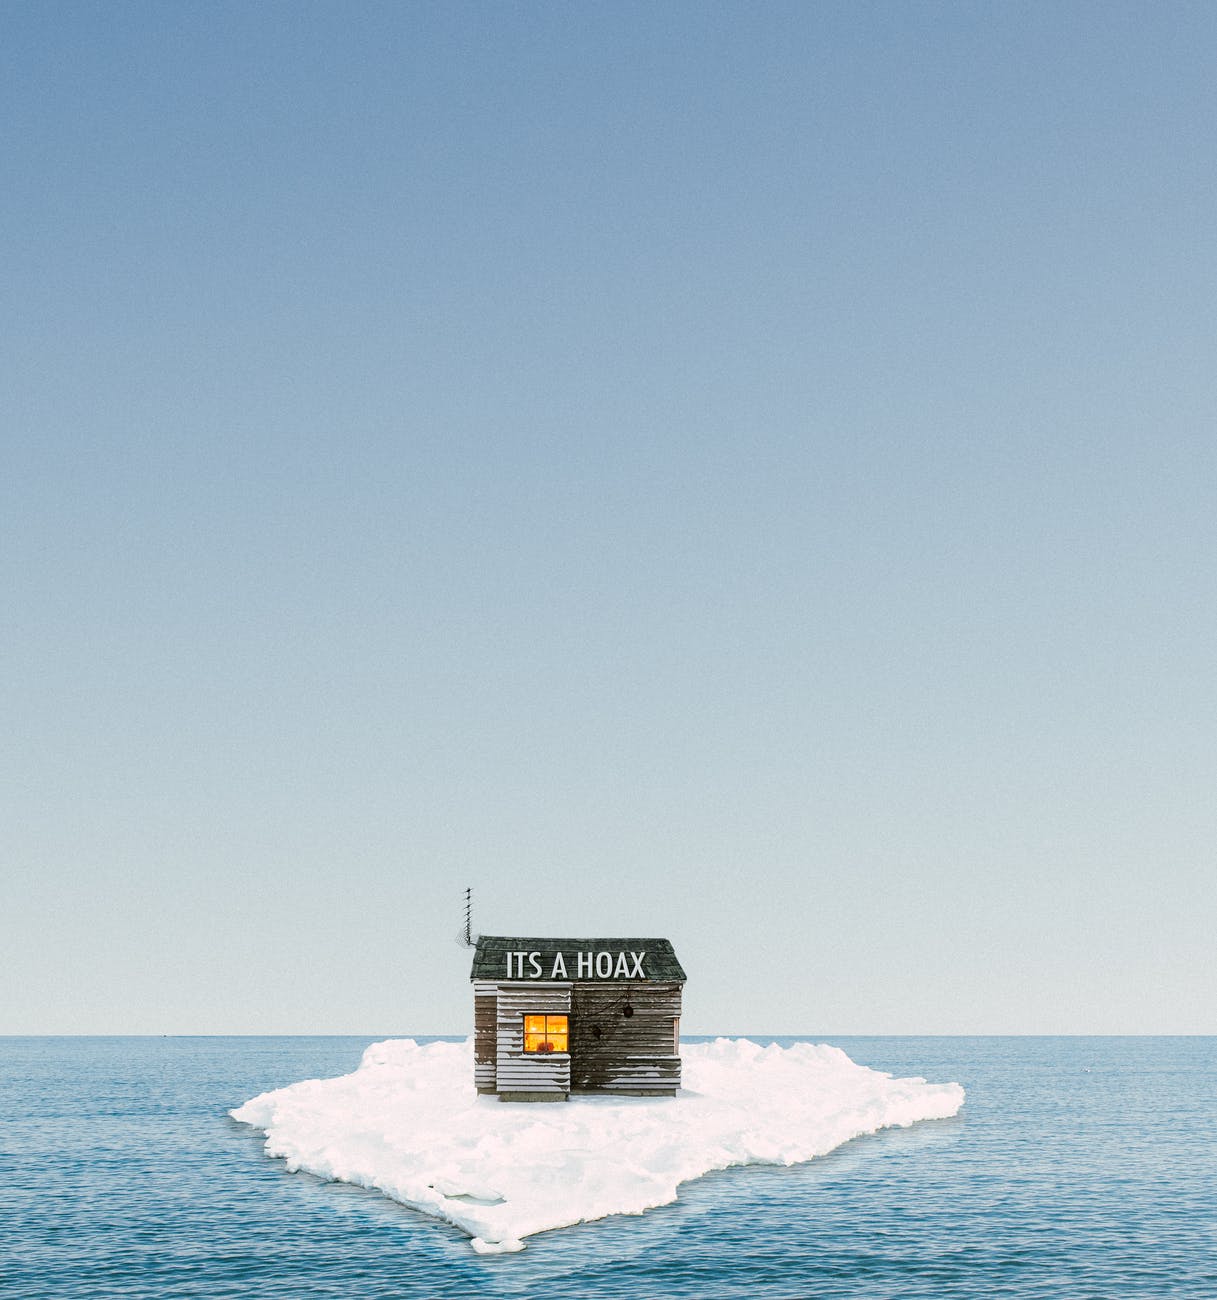 Jeff-Czum-House-On-An-Iceberg